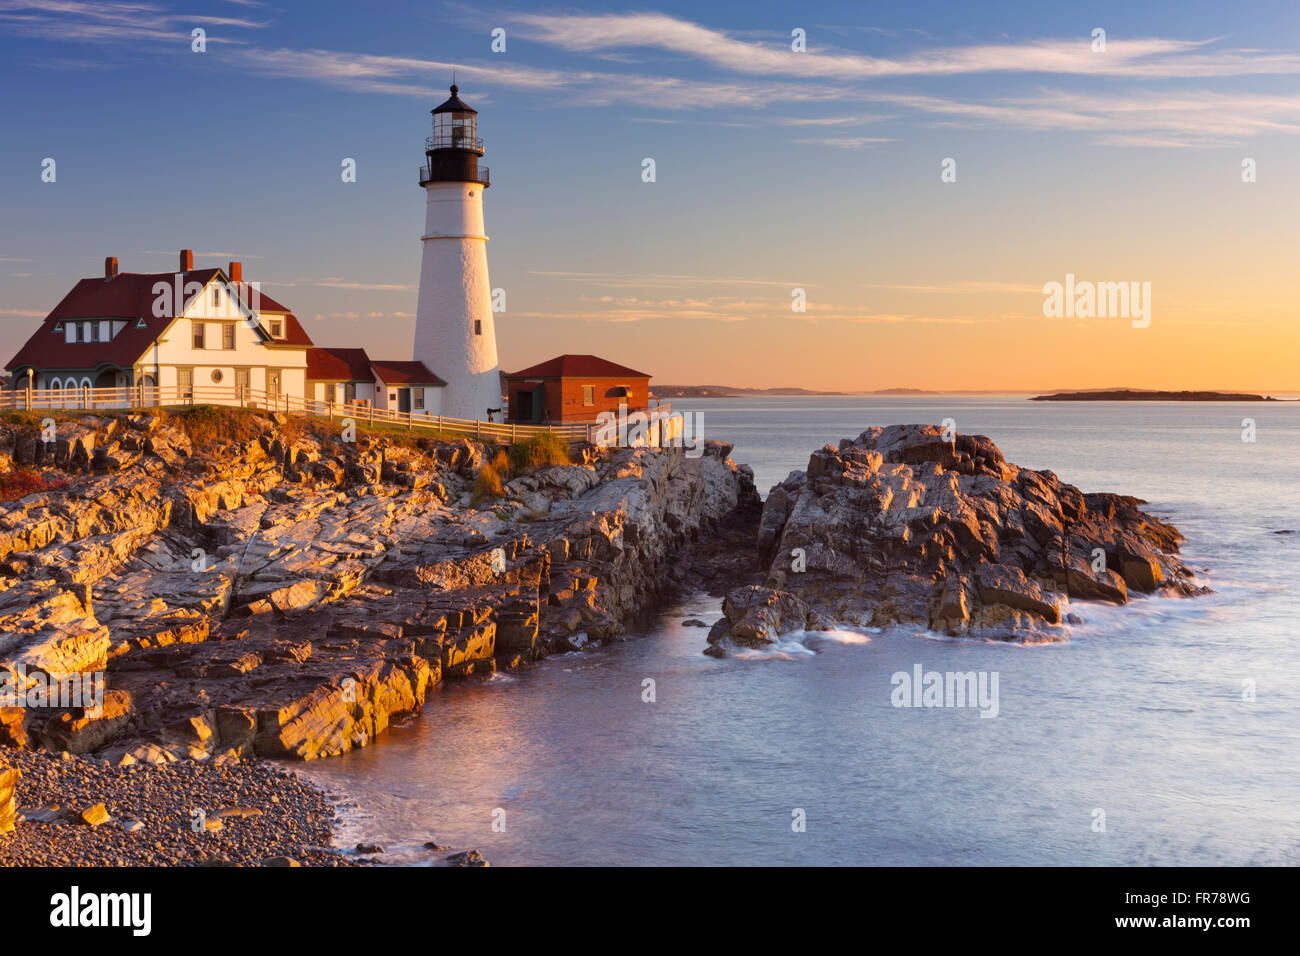 The Portland Head Lighthouse in Cape Elizabeth, Maine, USA. Photographed at sunrise. Stock Photo